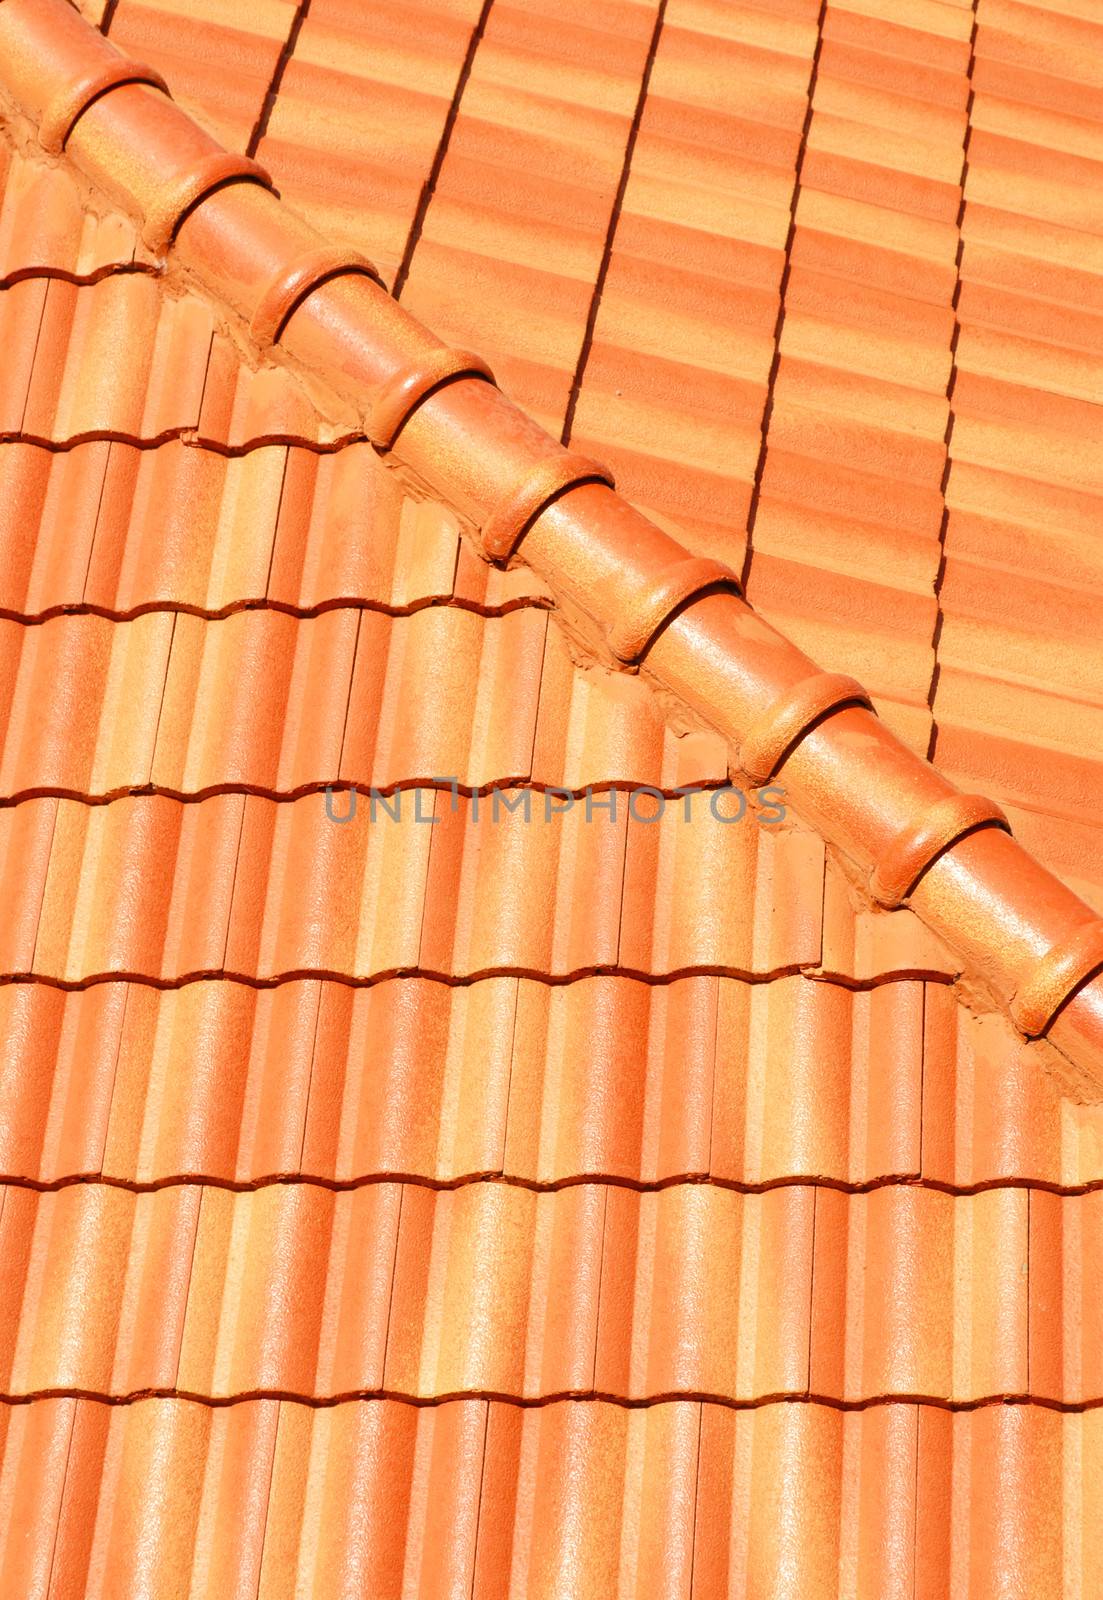 Orange roof tiles background